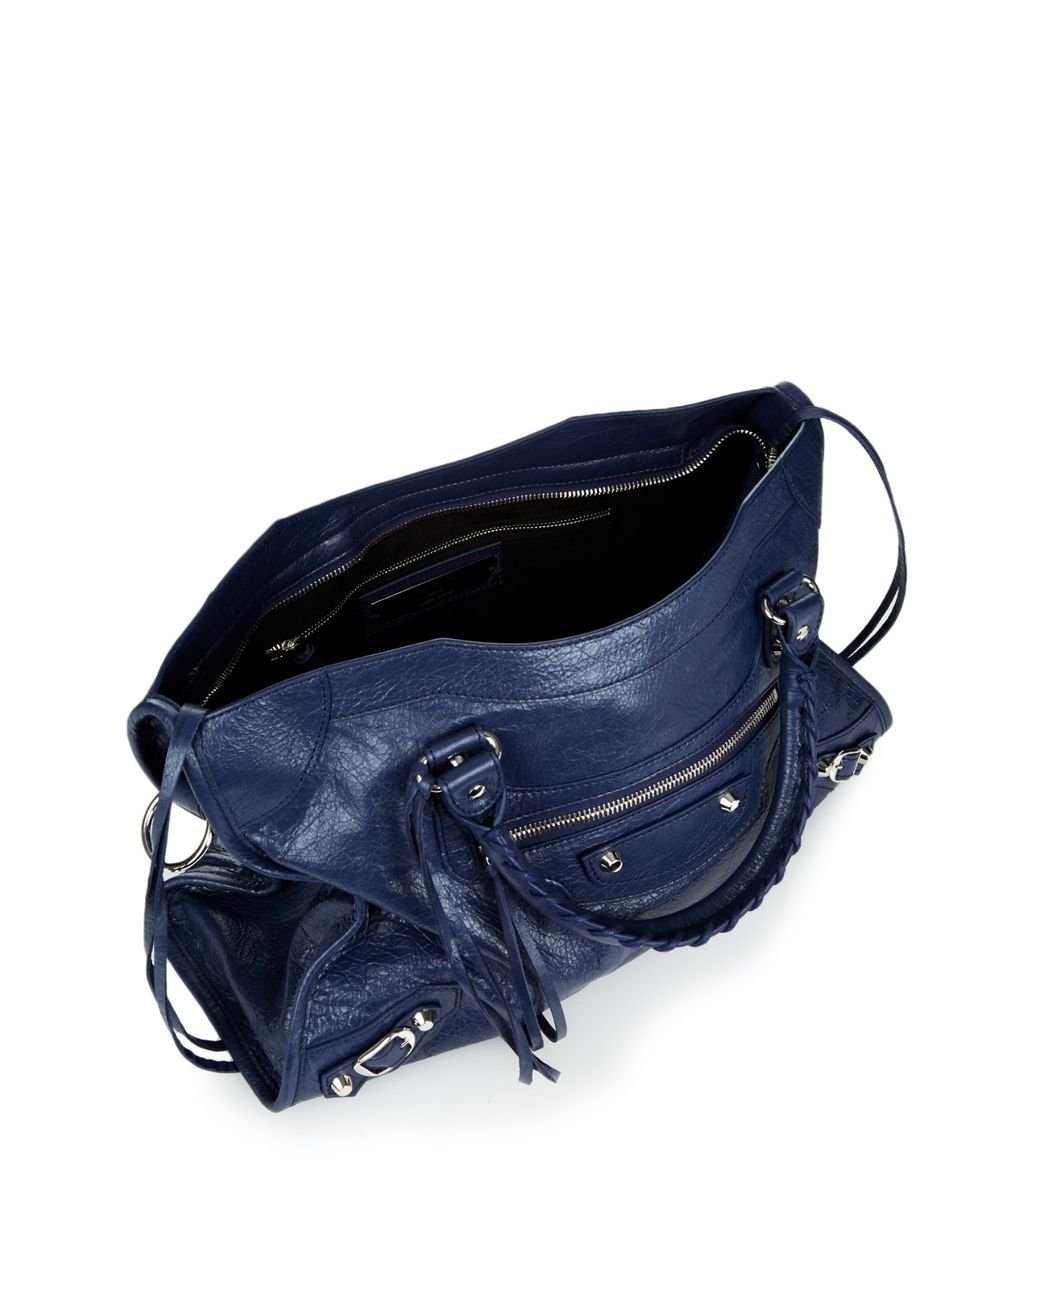 Balenciaga Classic City Leather Bag in Blue | Lyst